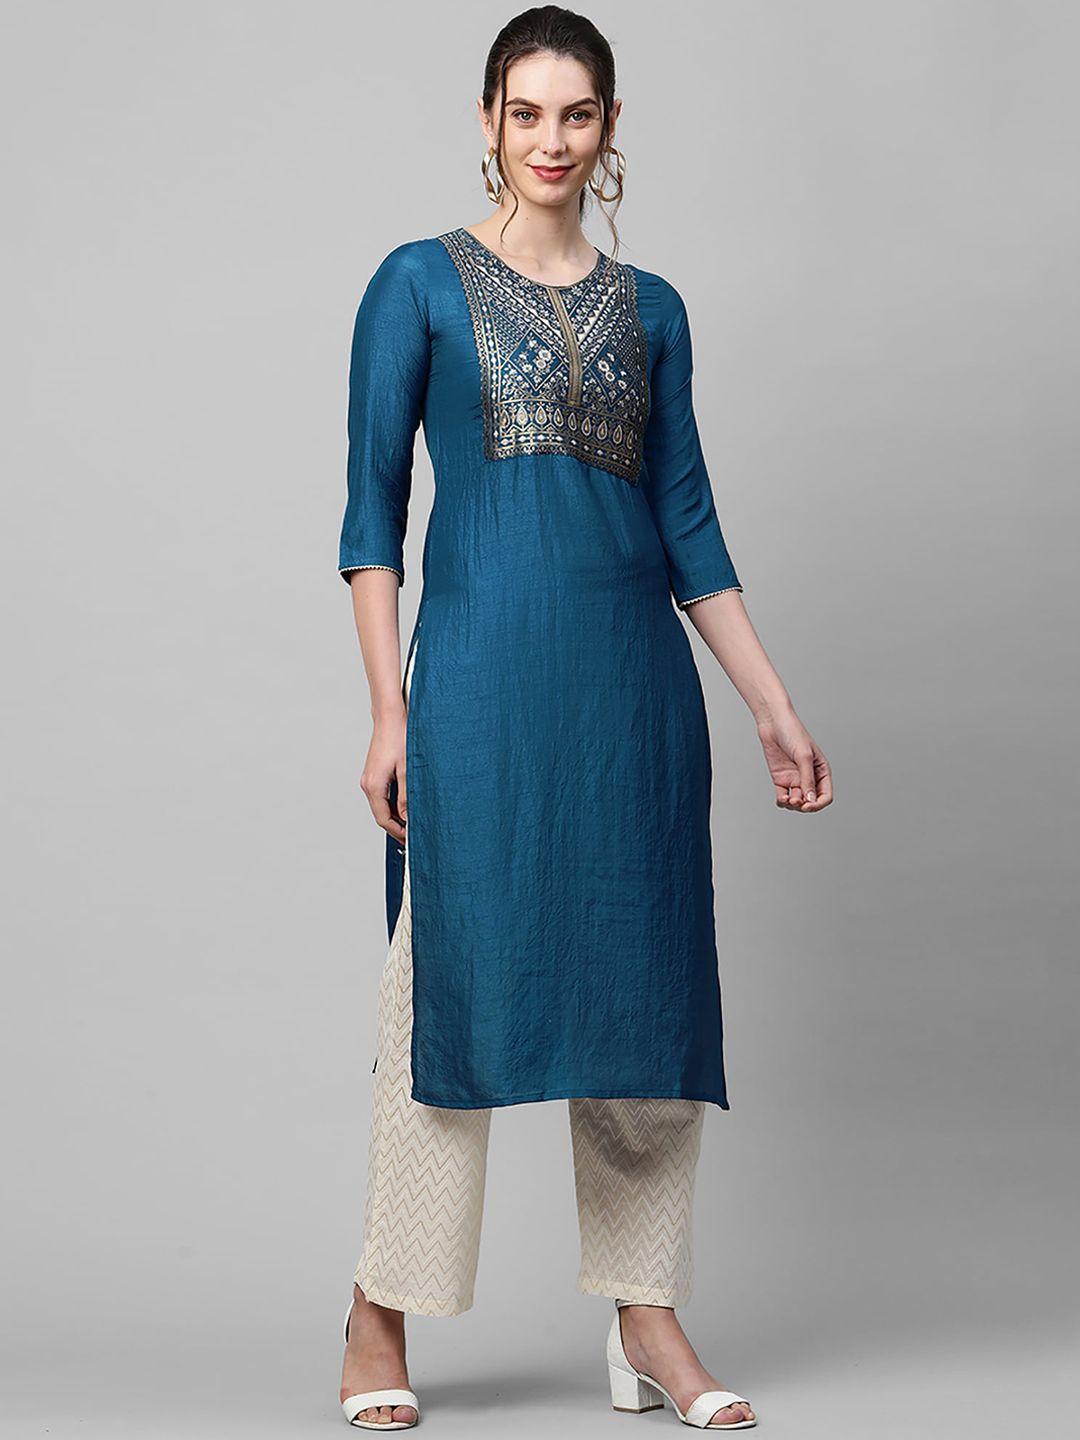 indo era women navy blue & gold-toned ethnic motifs yoke design kurta